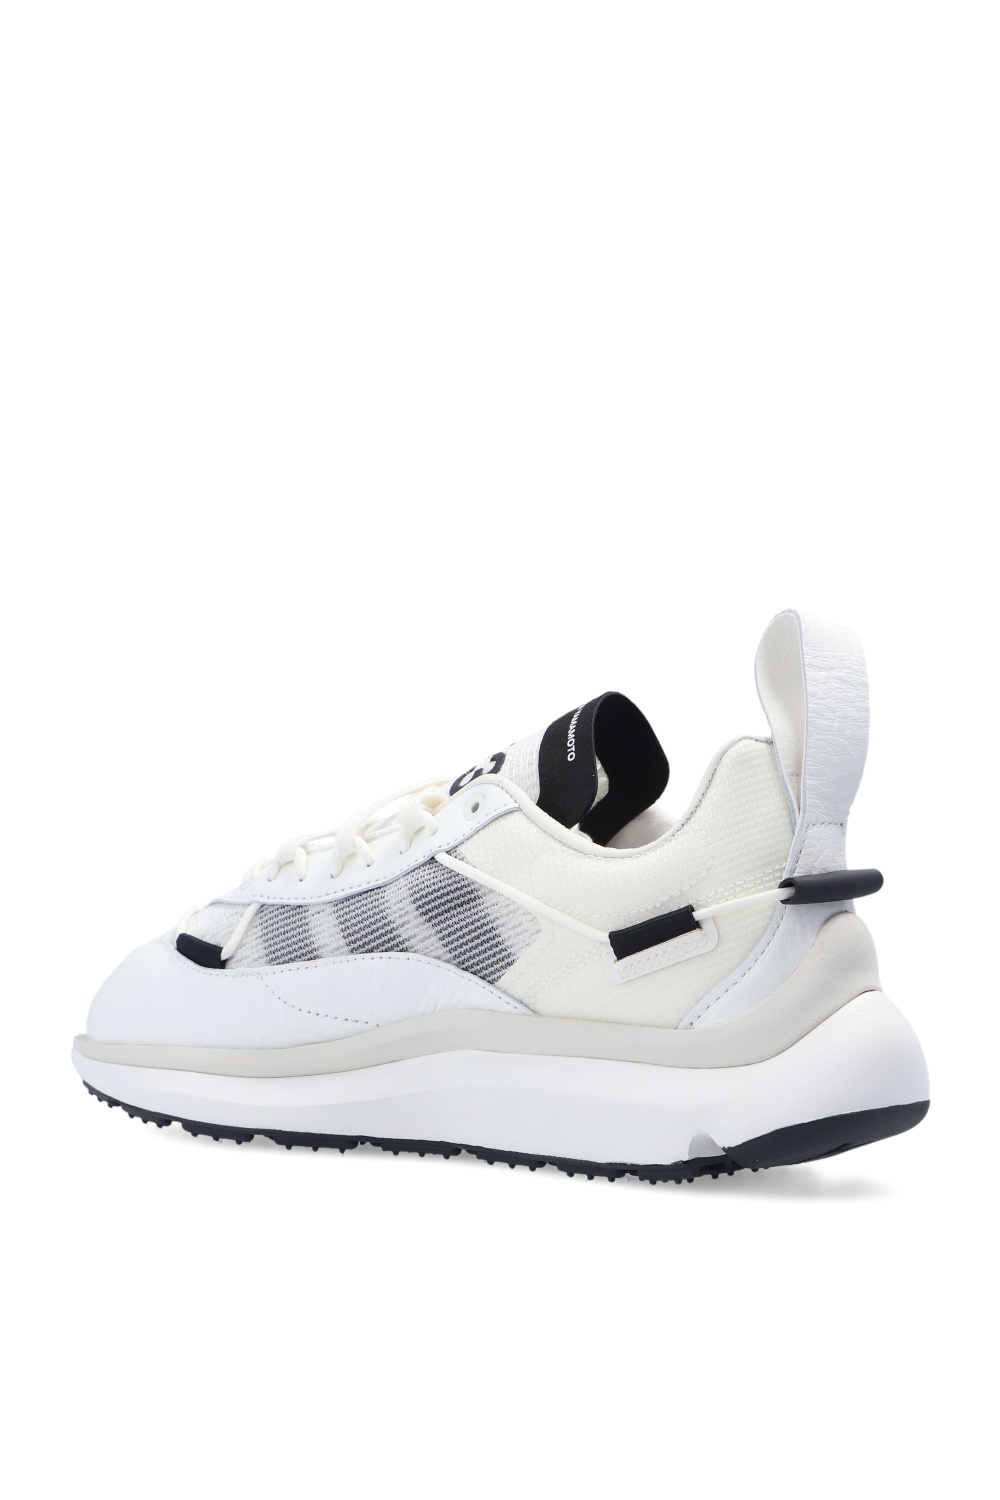 Y-3 Yohji Yamamoto ‘Shiku Run’ sneakers